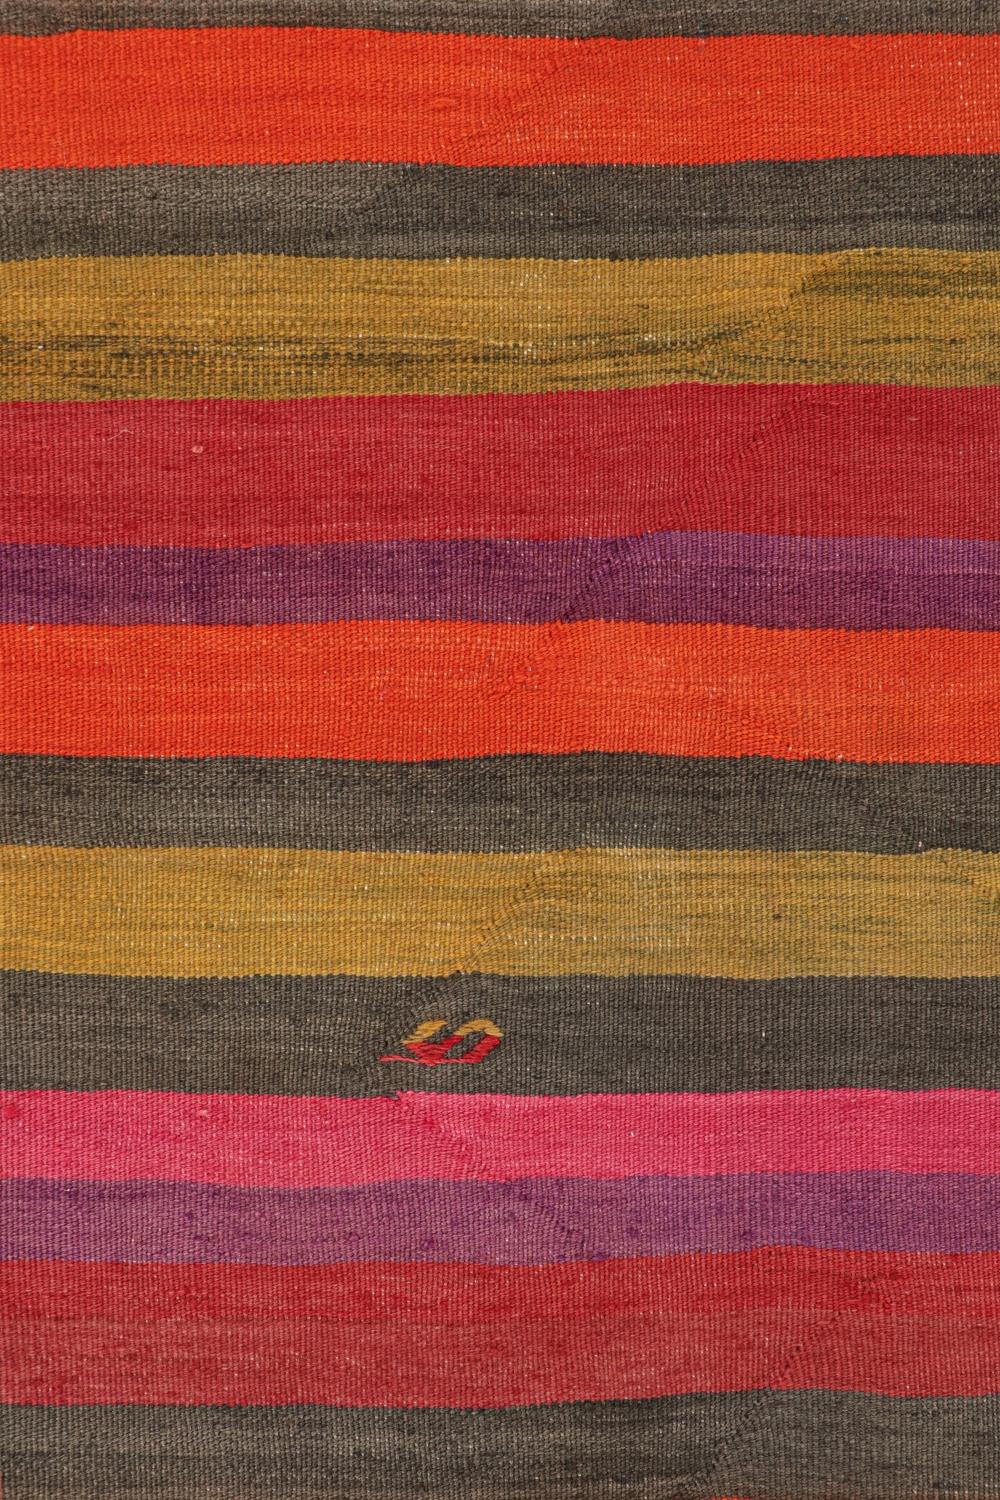 Tribal Vintage Shahsavan Persian Kilim with Multicolor Stripes For Sale